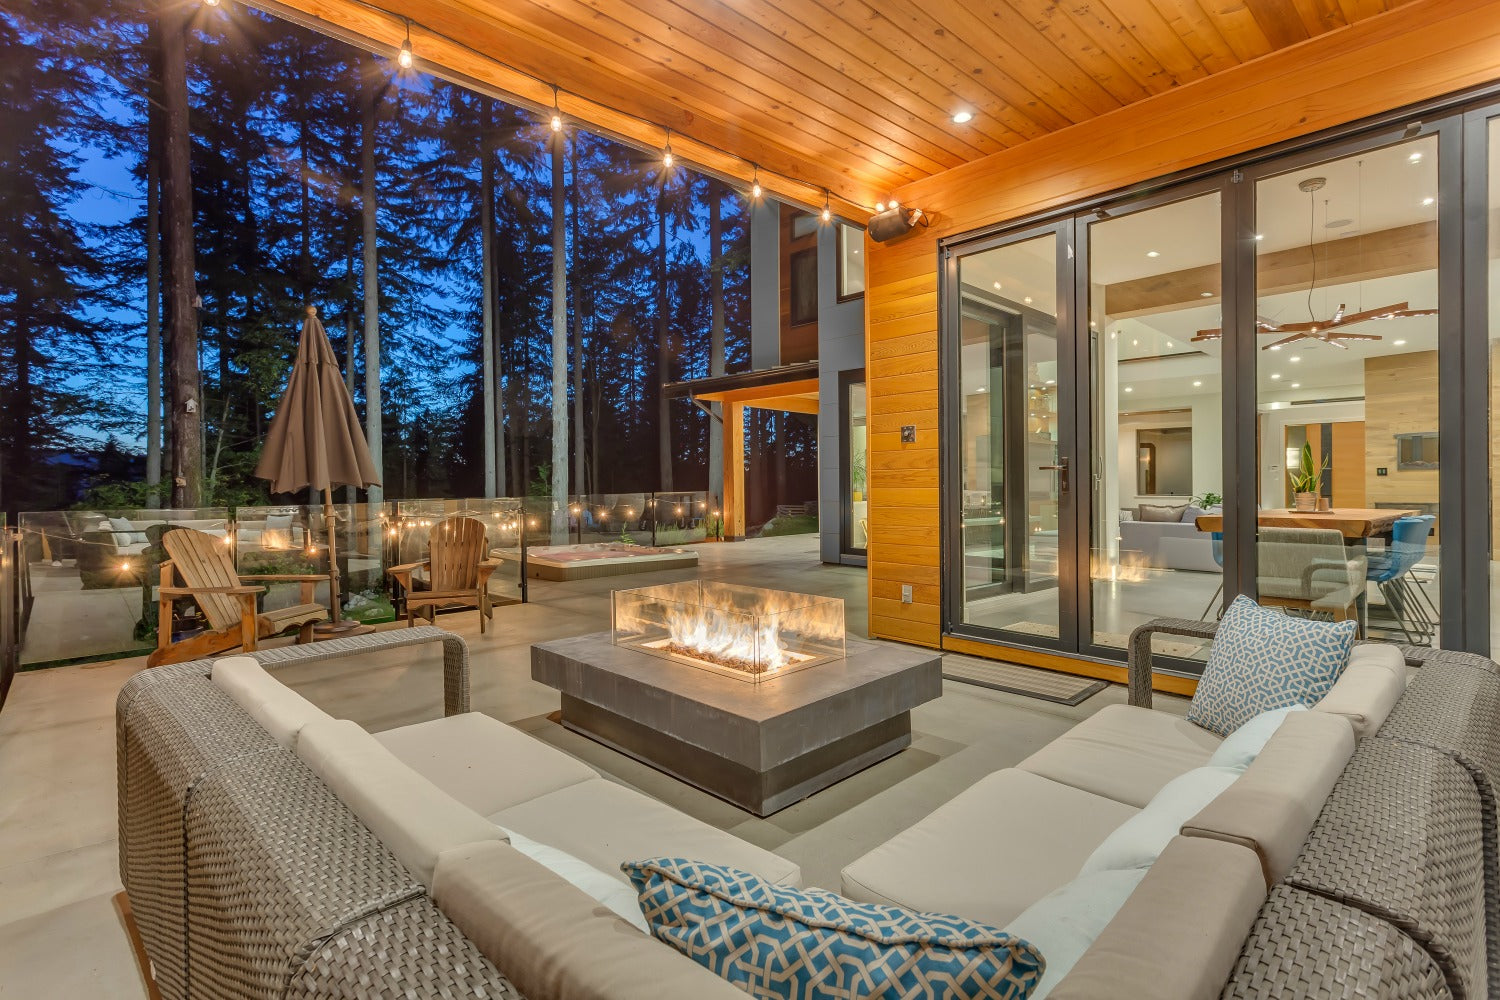 Indoor-Outdoor Living Space Ideas to Inspire Your Home Design